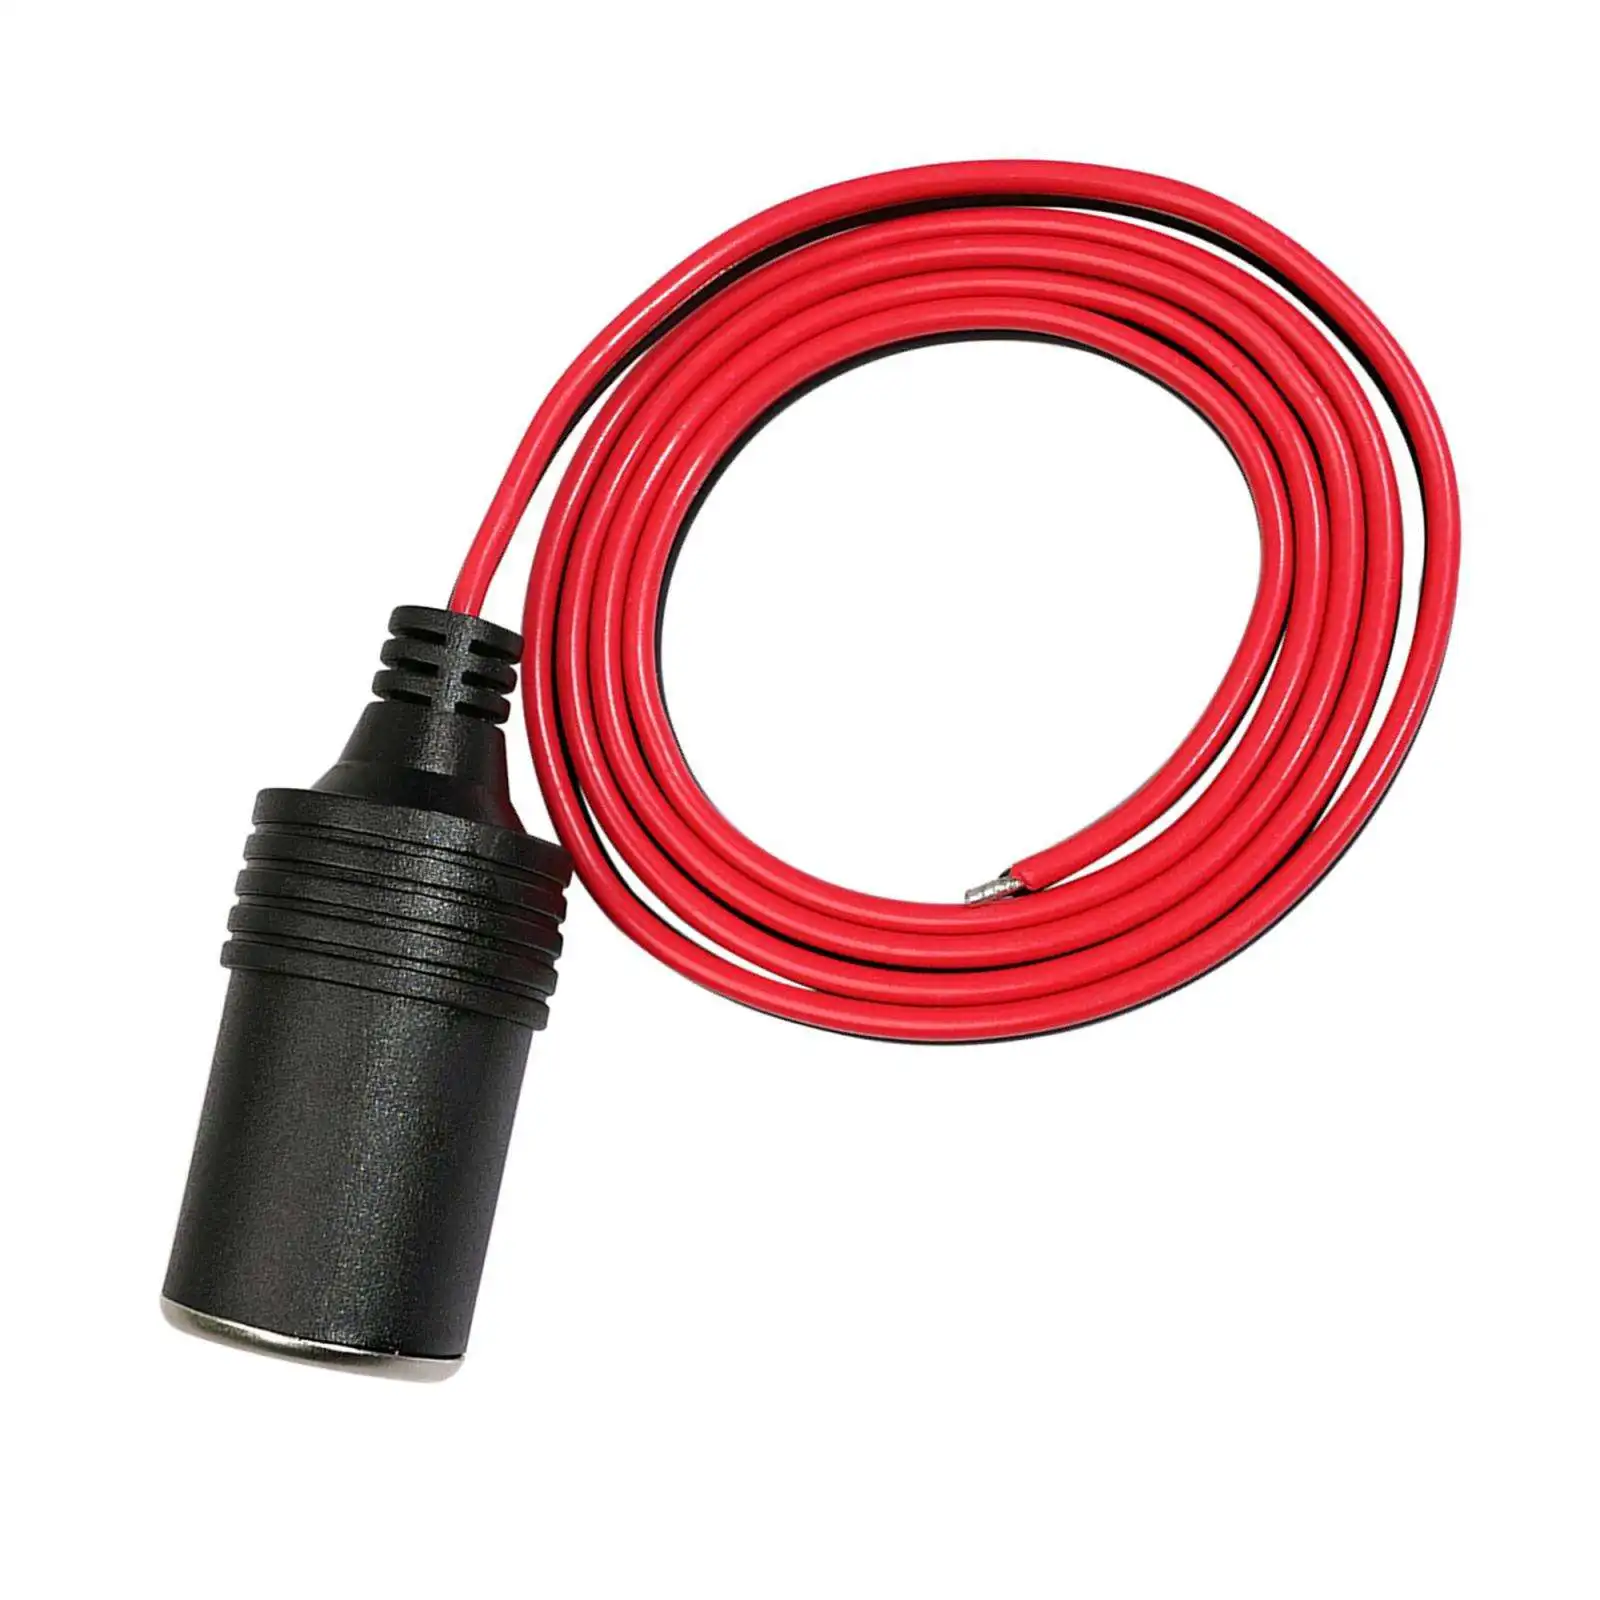 10A 12V 24V Car Cigarette Lighter Female Socket Cable Cord Power Plug Adapter